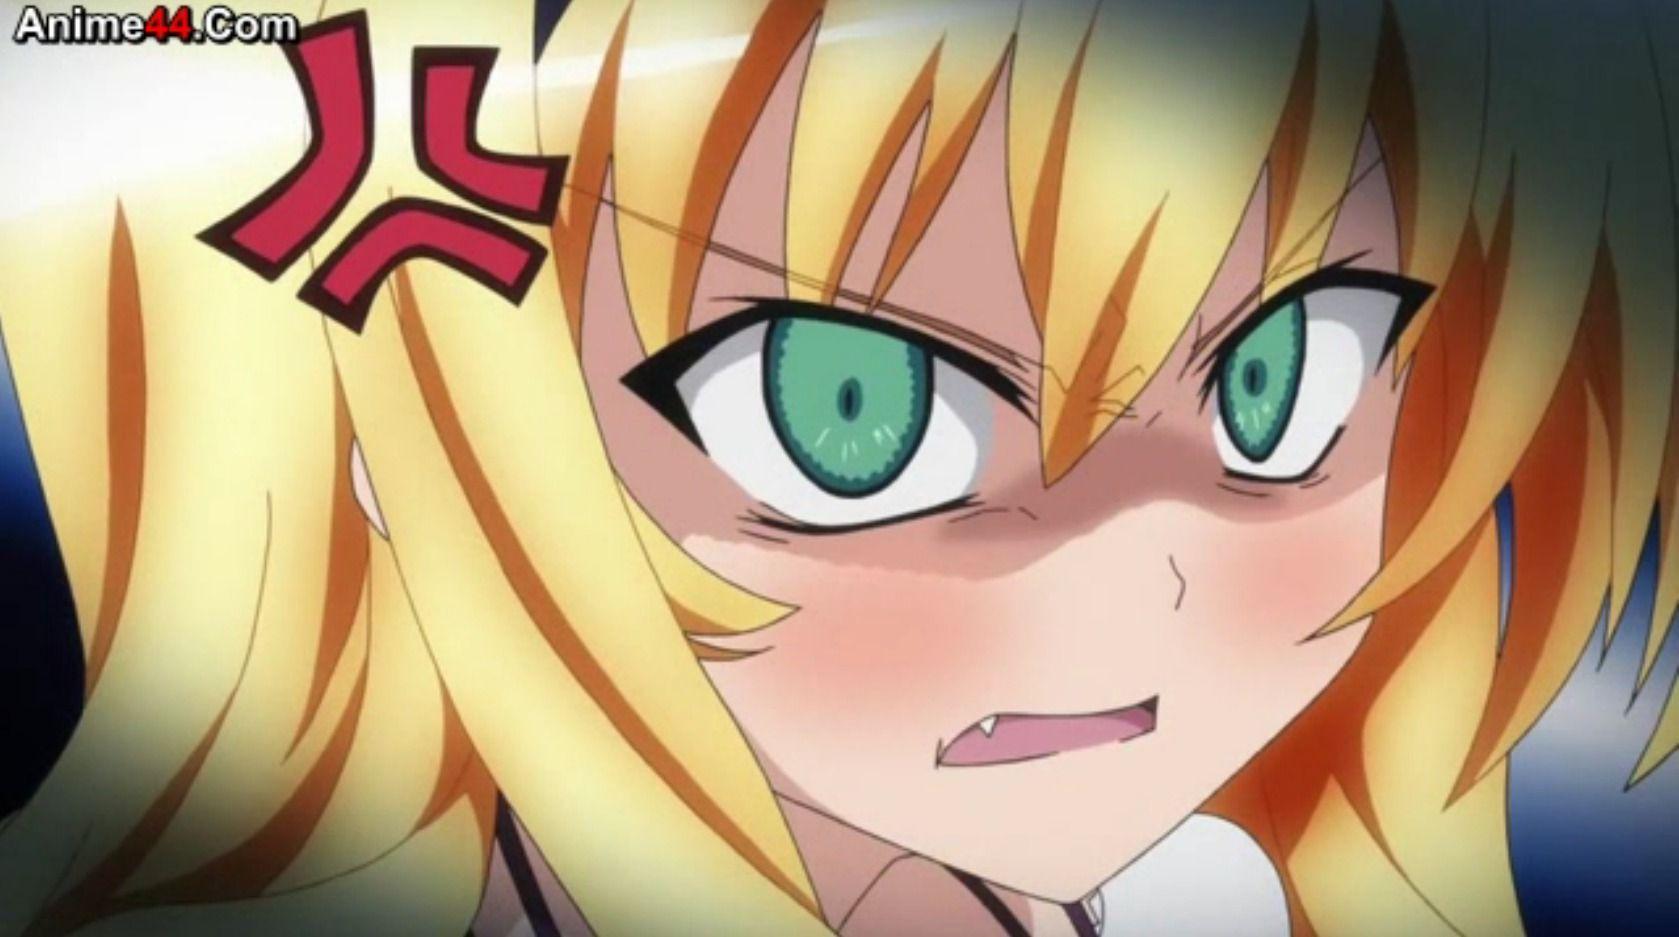 Angry Anime Girl wallpaper.jpg